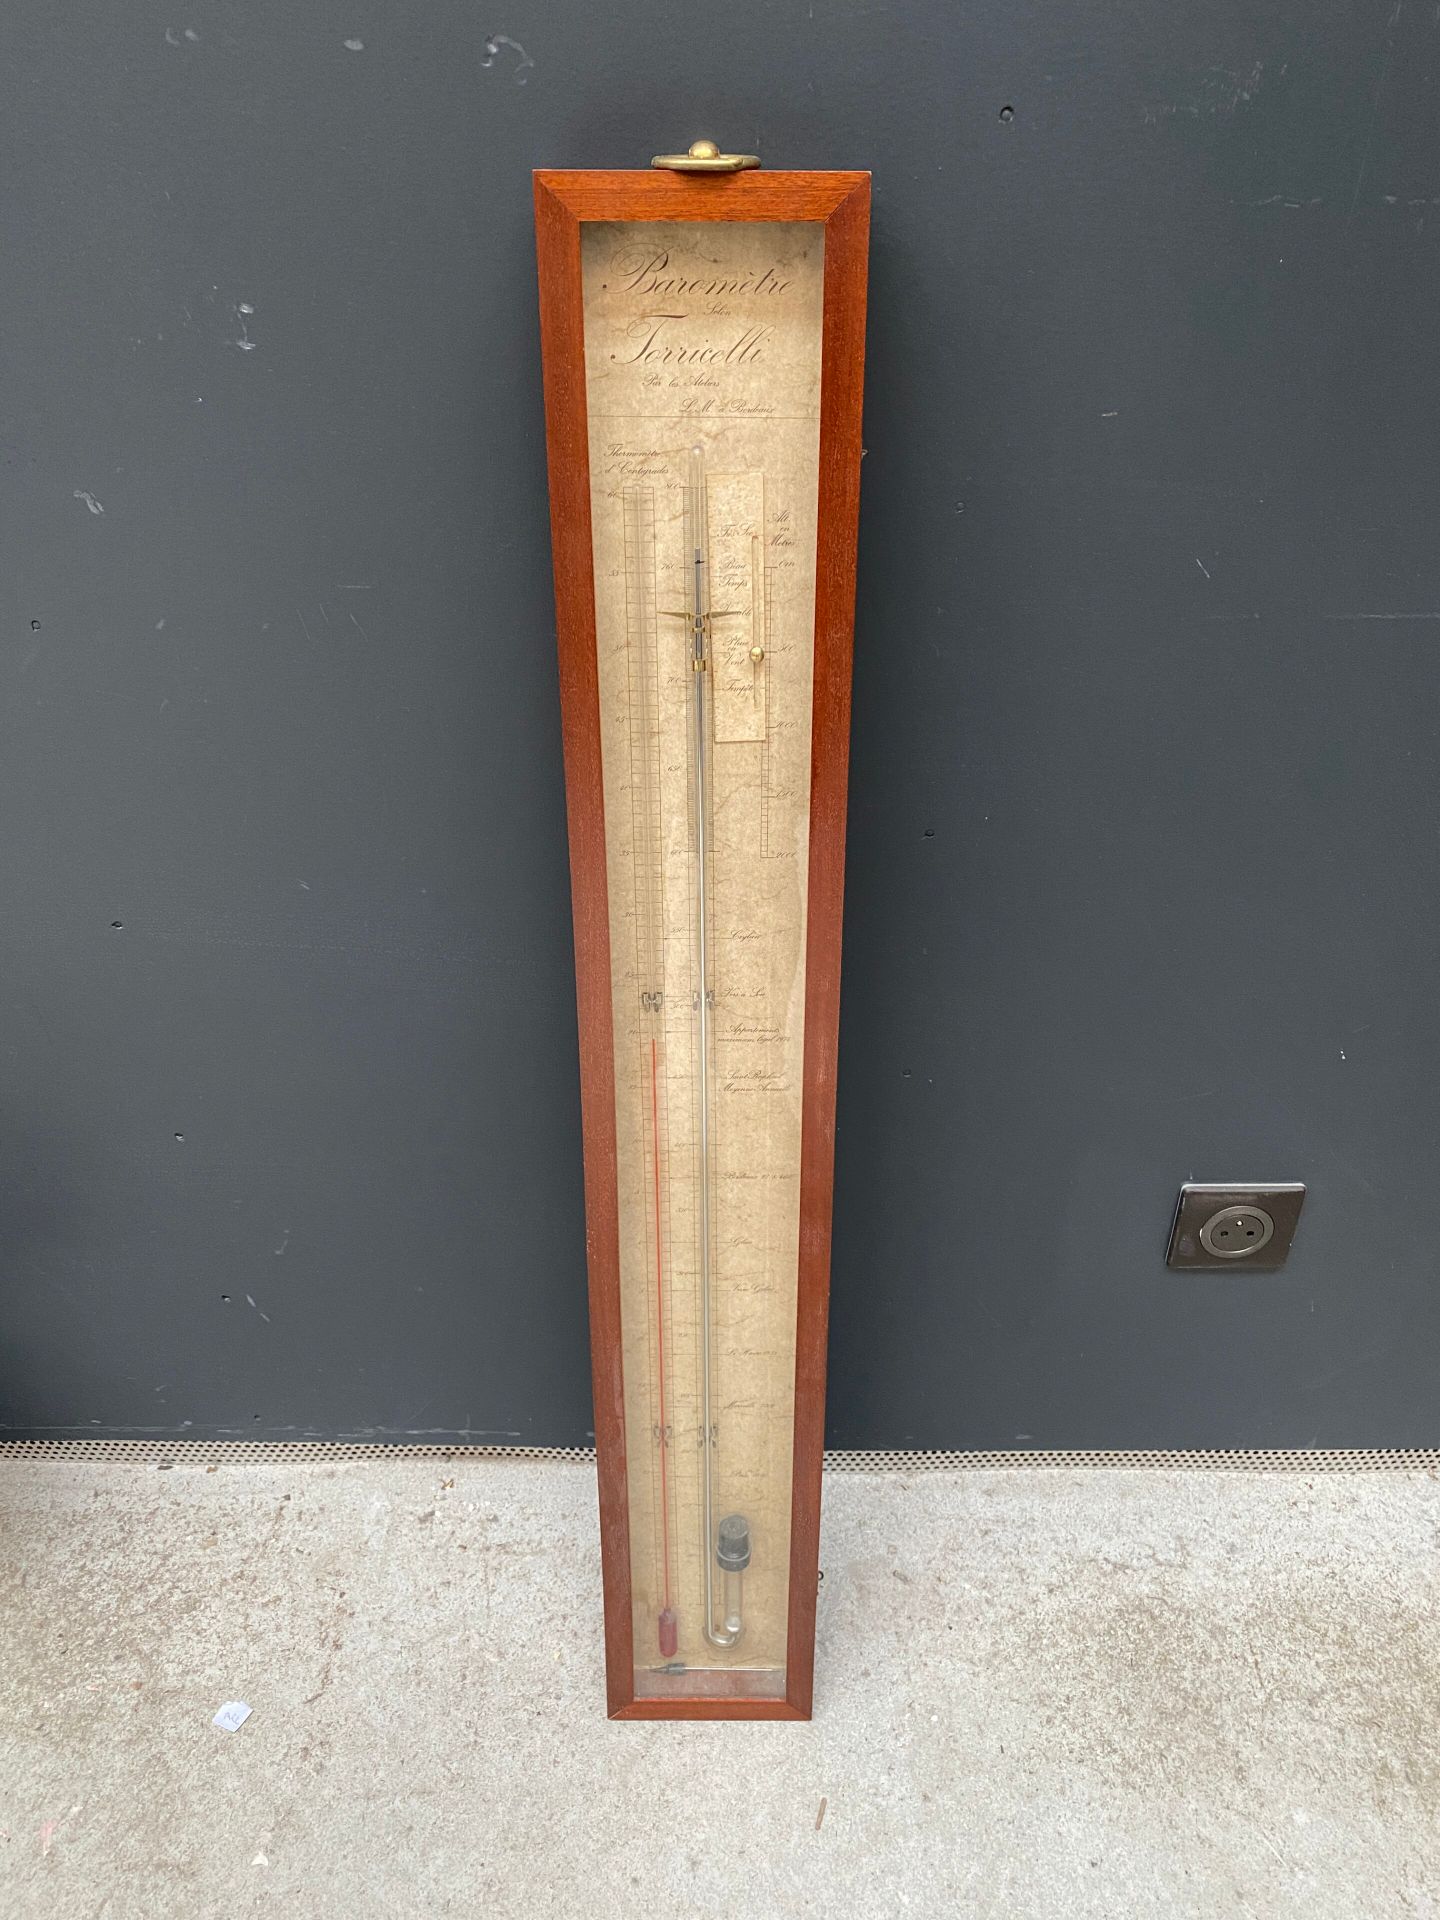 Null Barómetro - termómetro Torricelli

107 x 15 cm